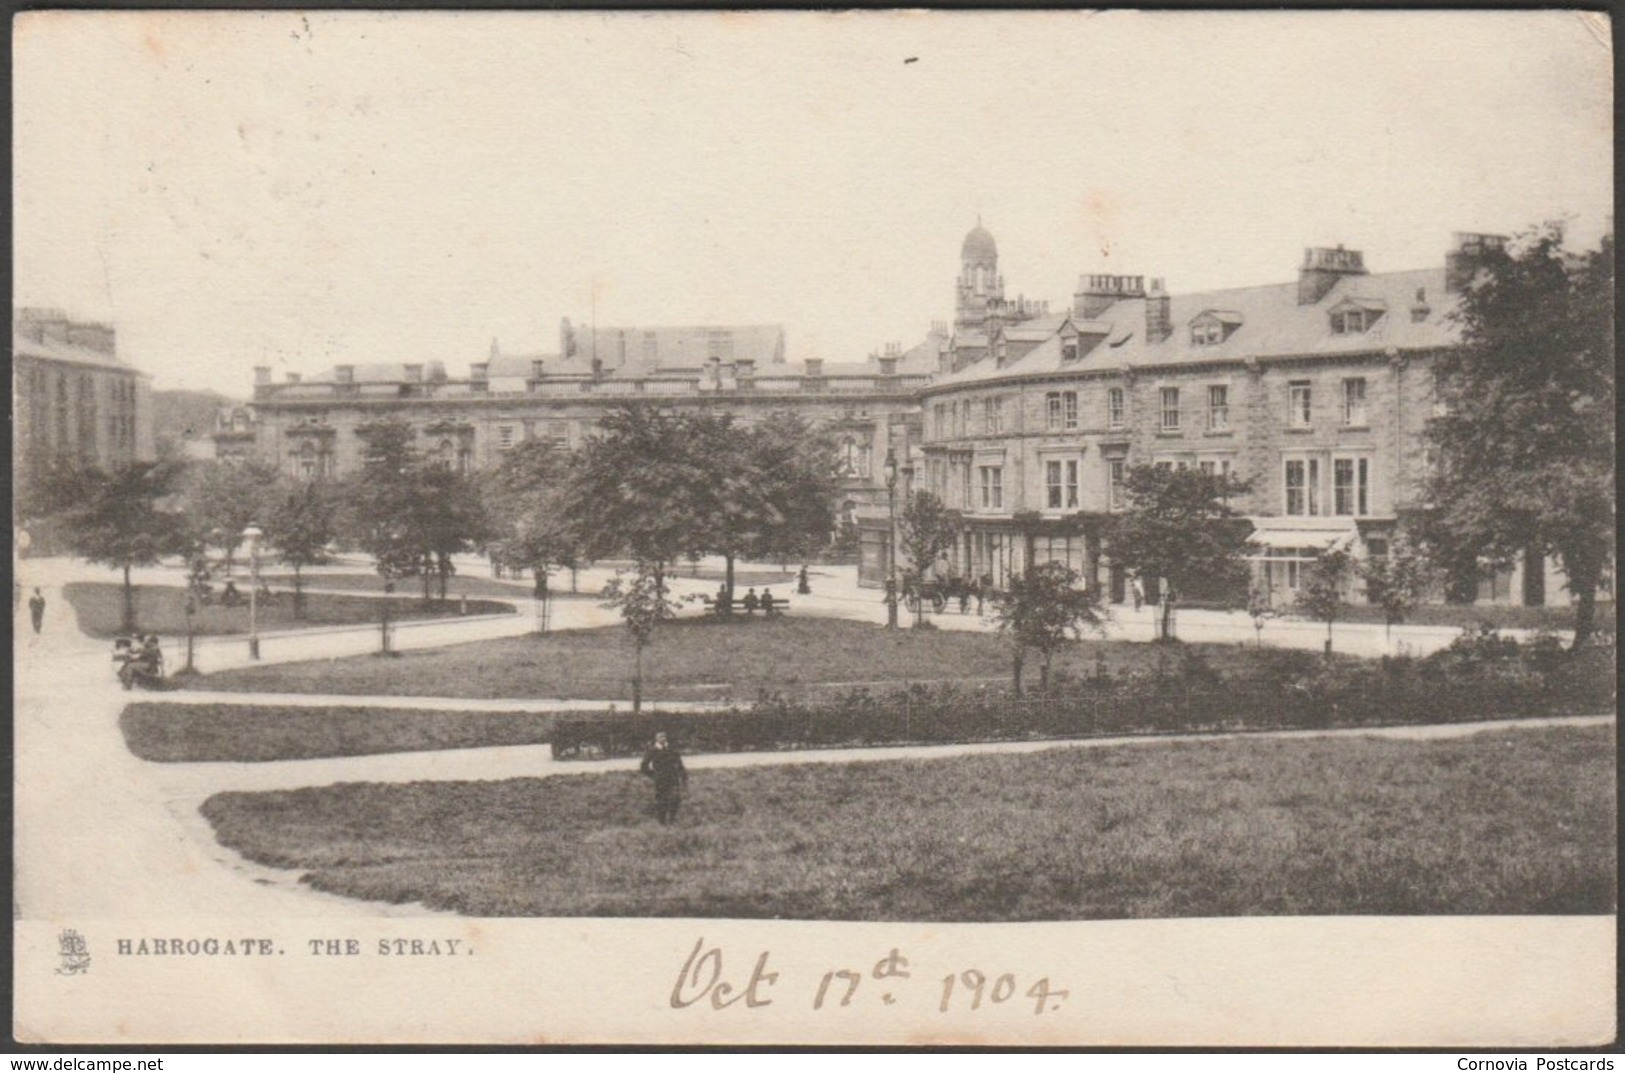 The Stray, Harrogate, Yorkshire, 1904 - Tuck's Postcard - Harrogate